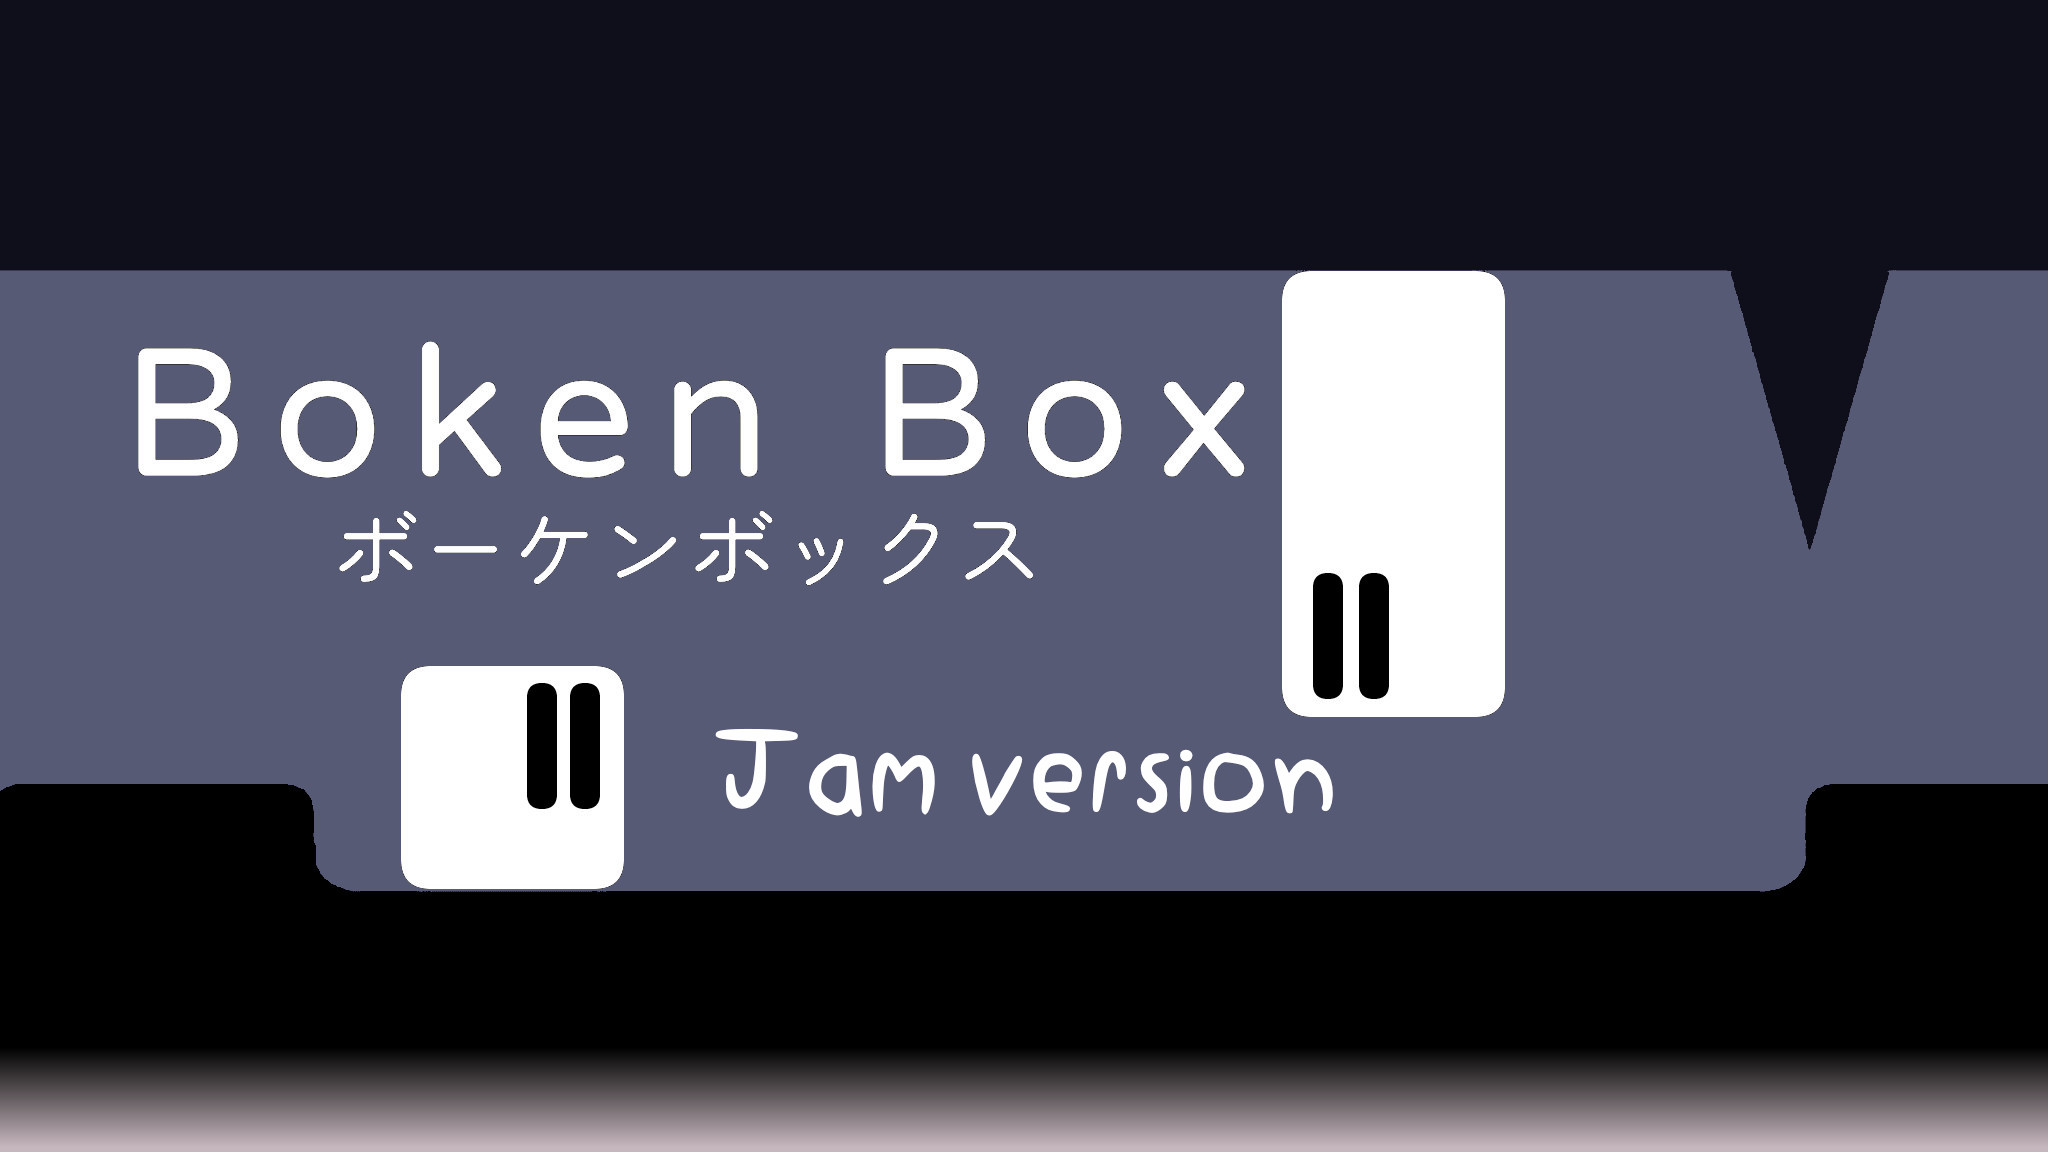 Bokun Box: Jammed